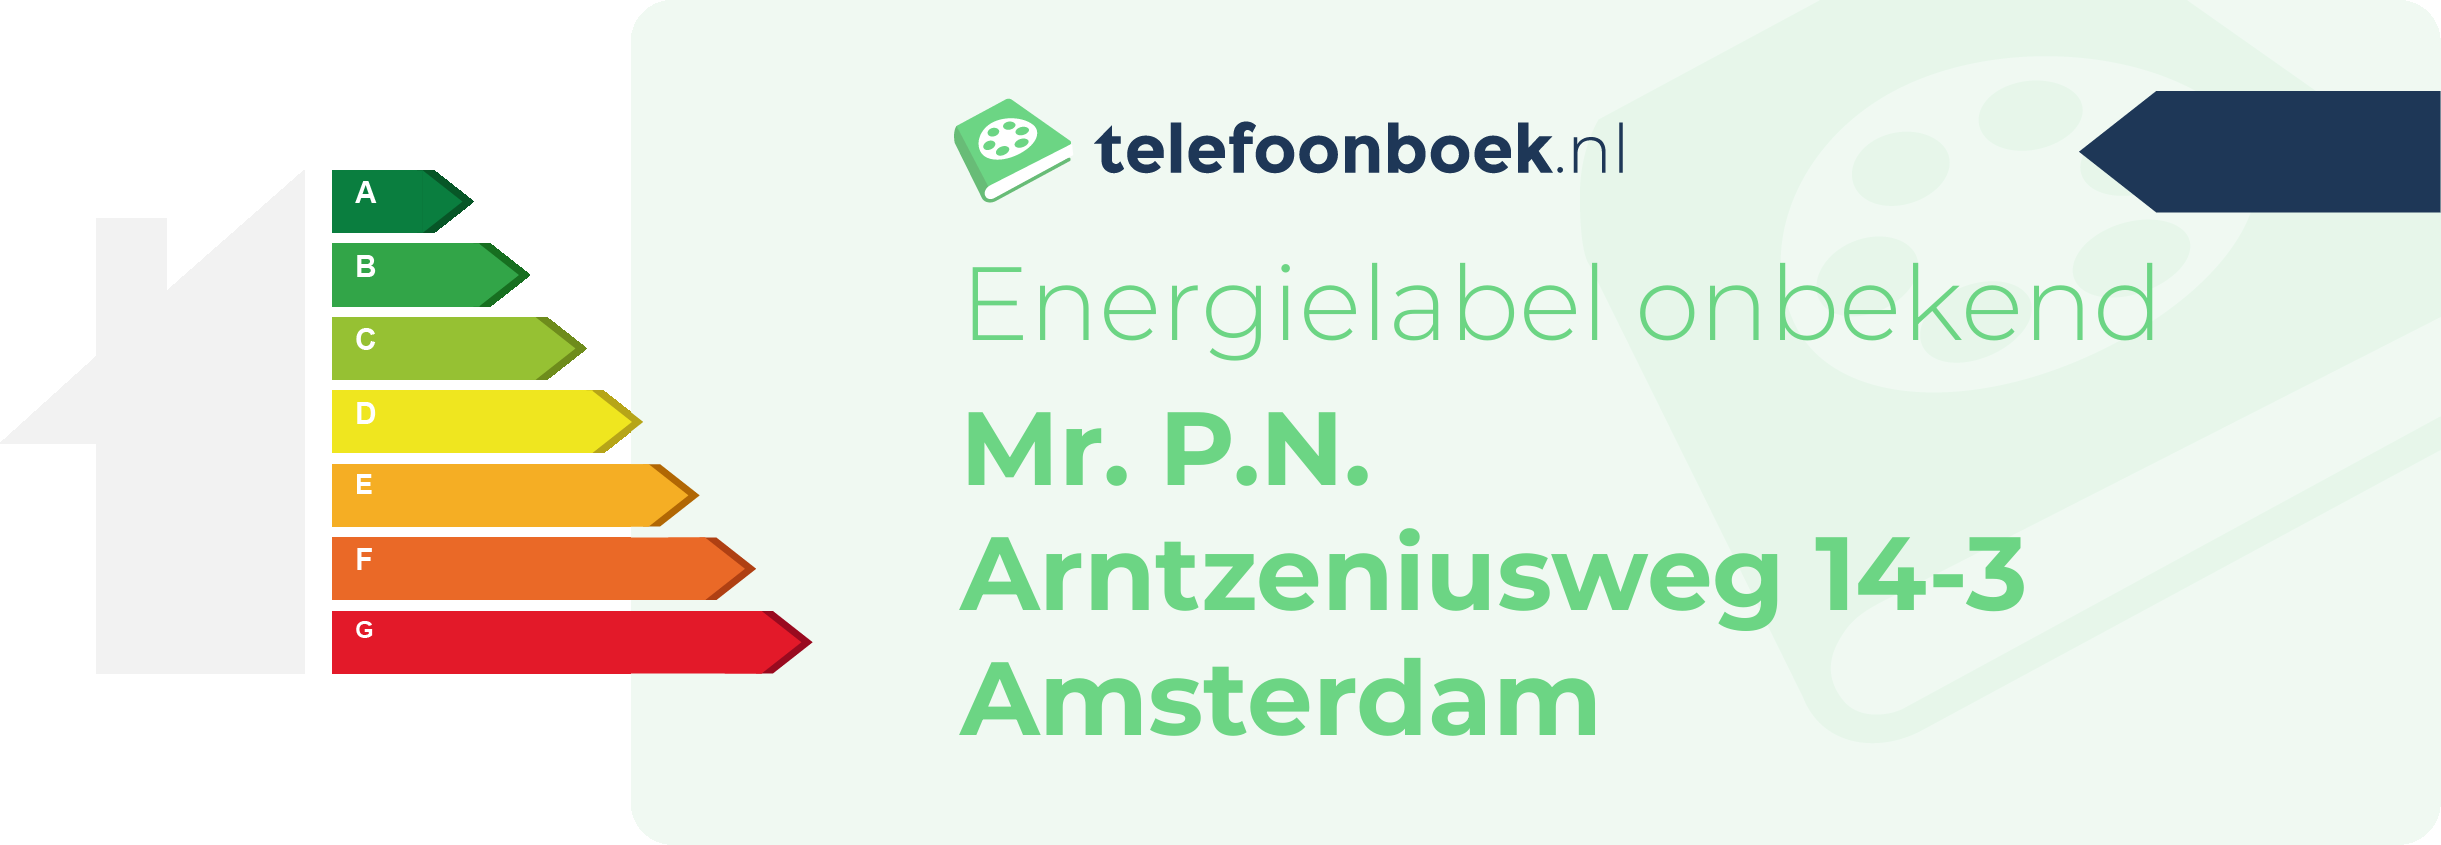 Energielabel Mr. P.N. Arntzeniusweg 14-3 Amsterdam